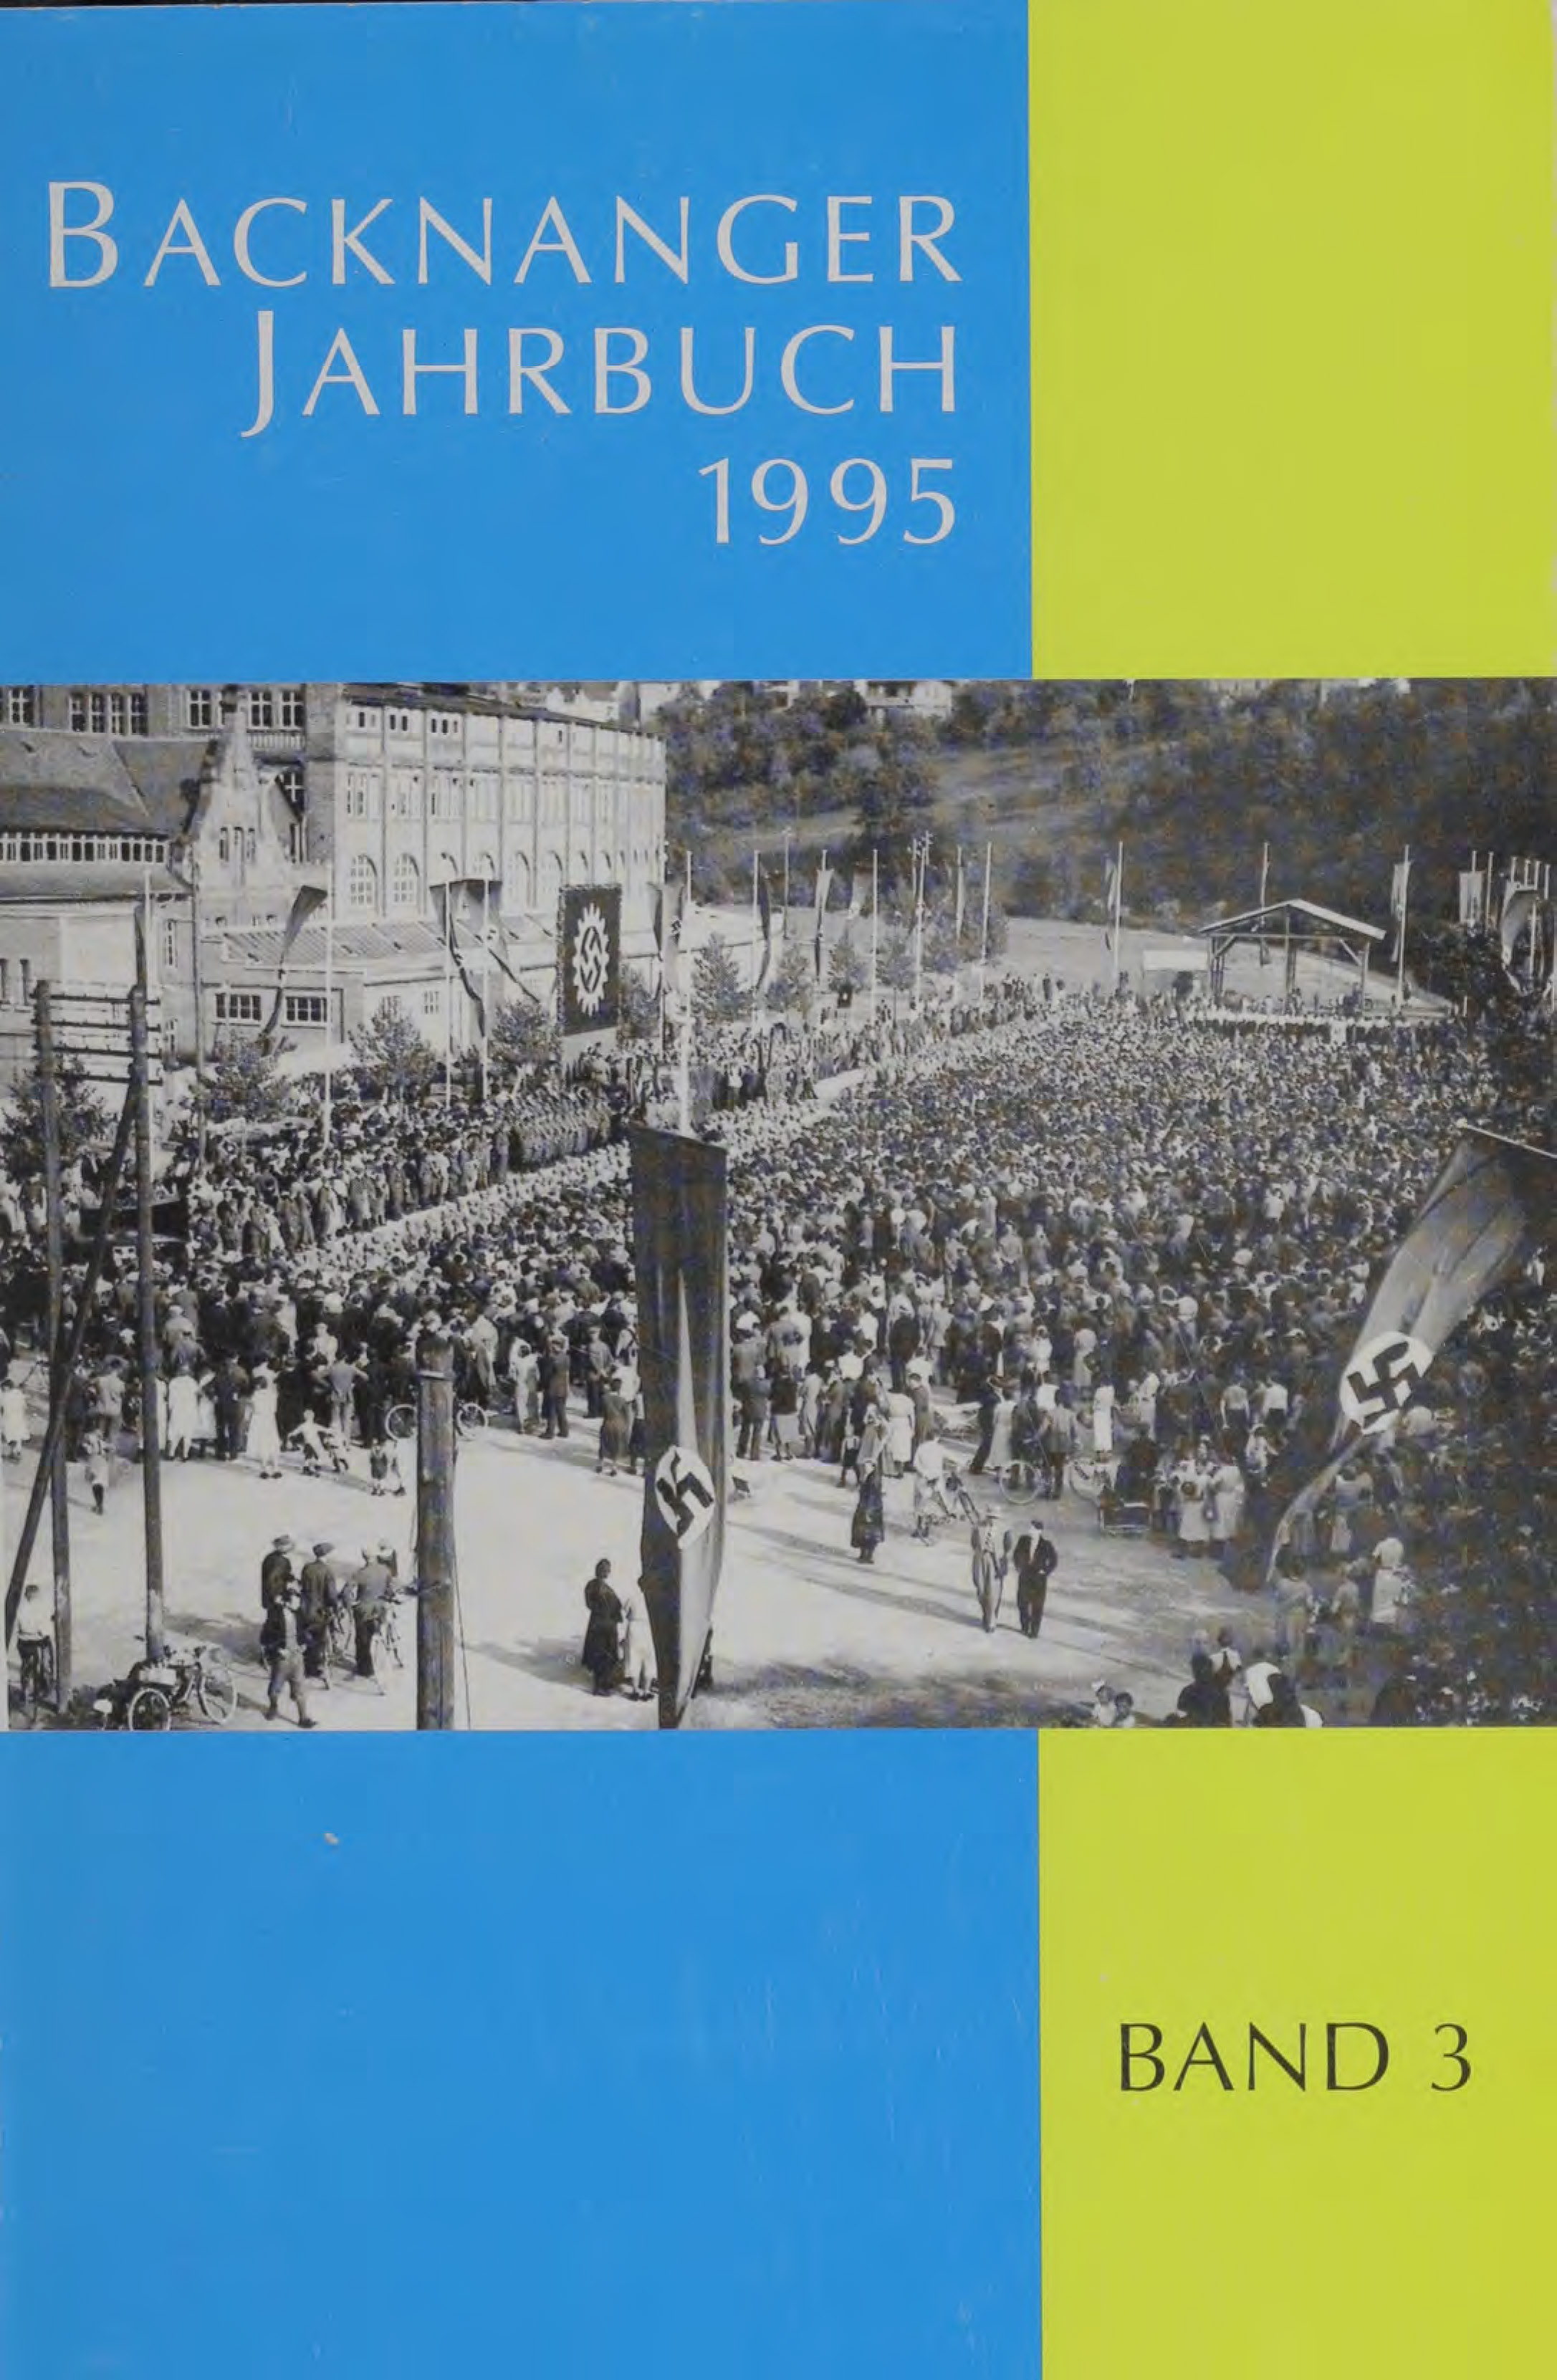                     Ansehen Bd. 3 (1995): Backnanger Jahrbuch
                